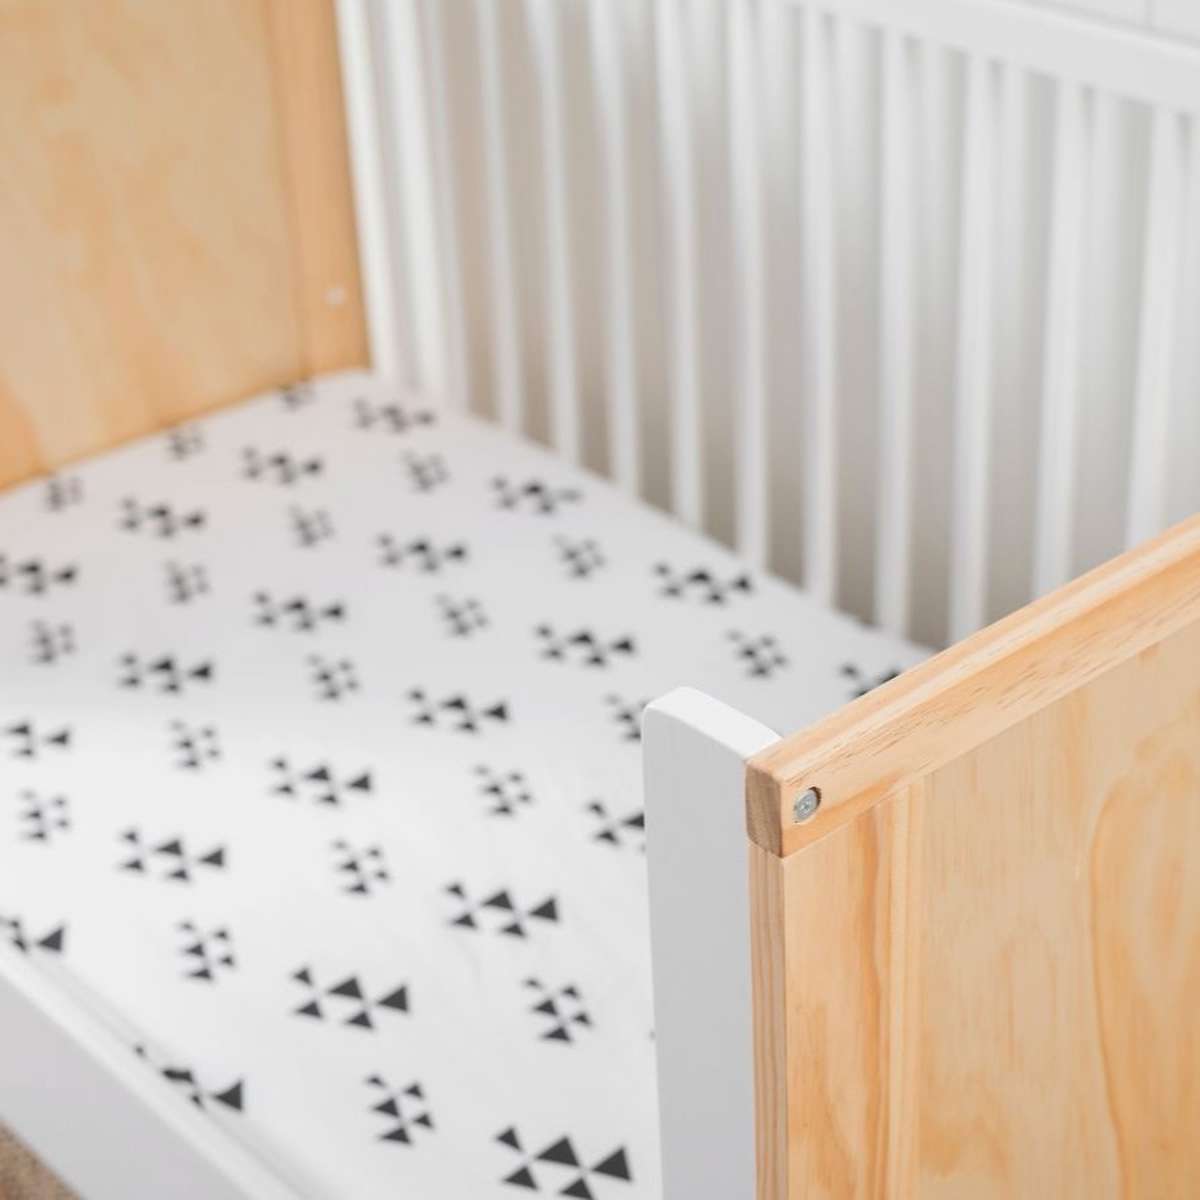 Mocka Cot Toddler Bed Conversion - White